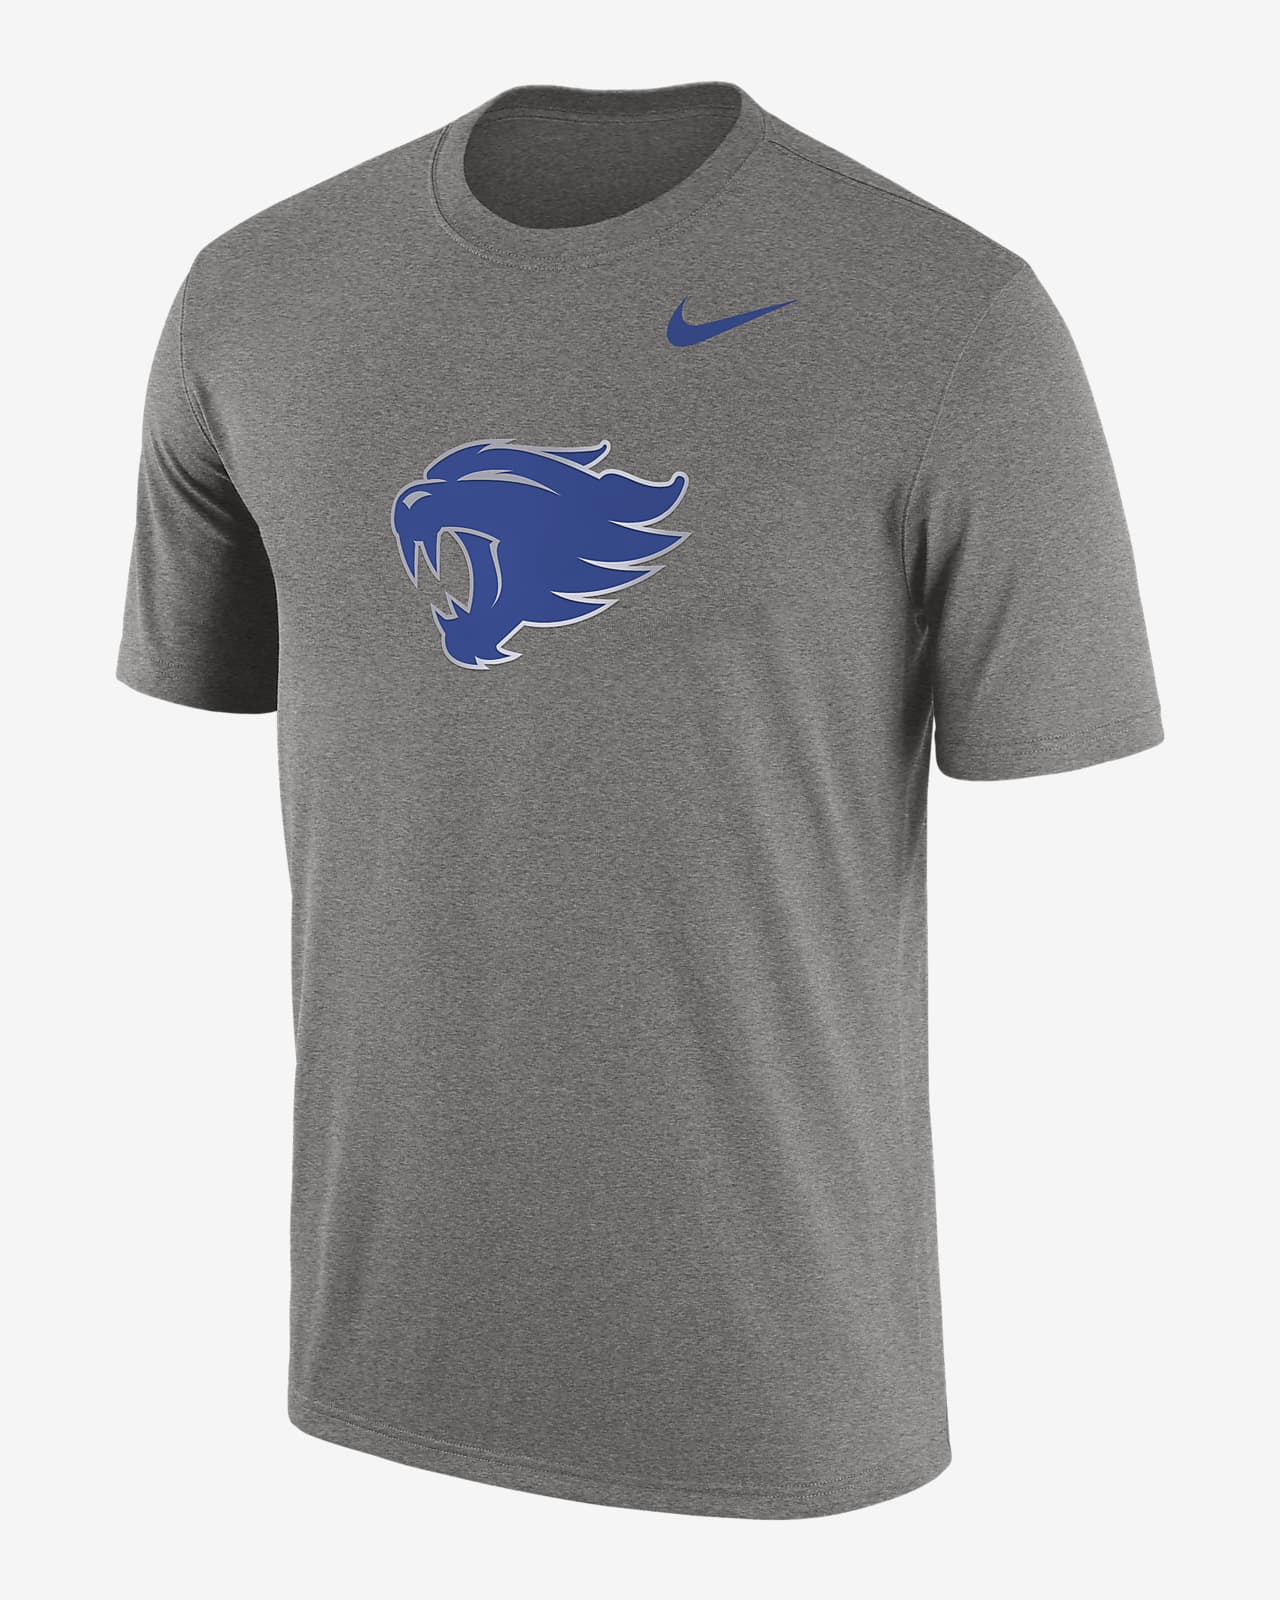 Kentucky Men's Nike College T-Shirt